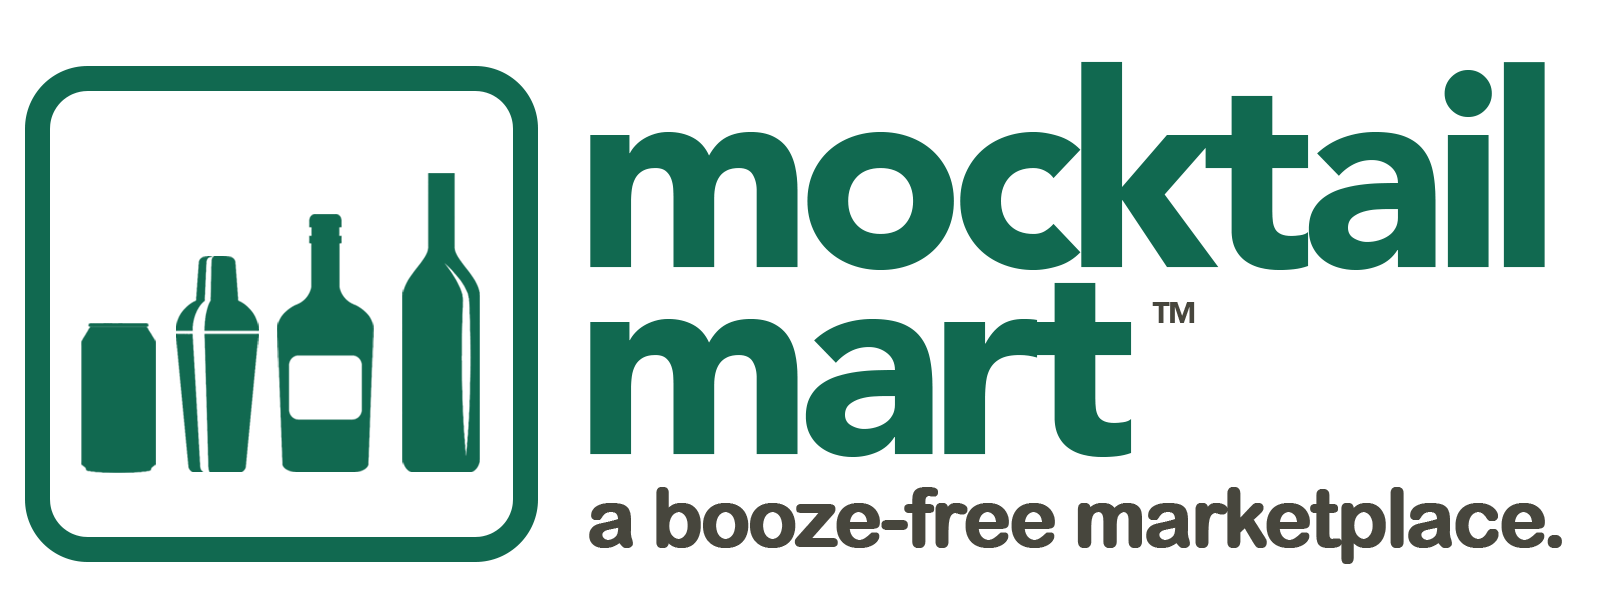 Mocktail Mart - A Booze-Free Marketplace